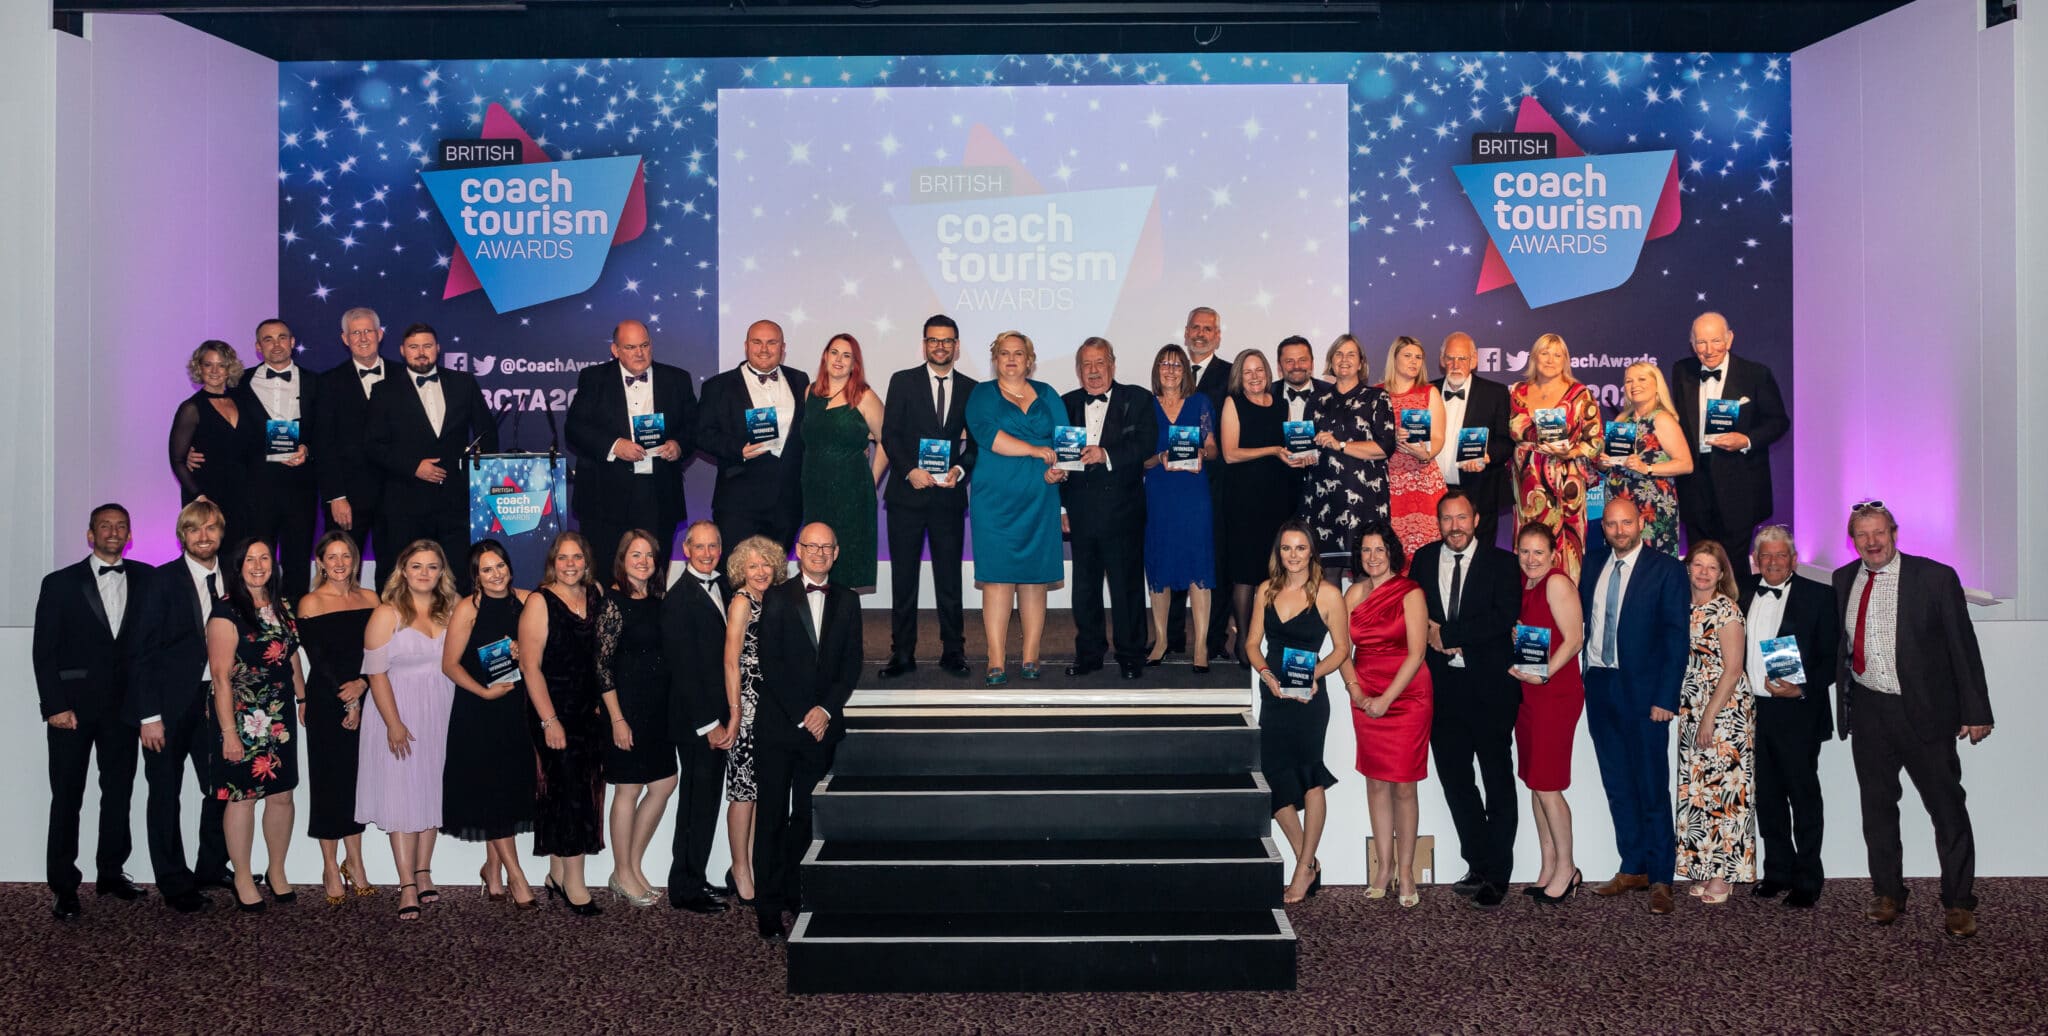 British Coach Tourism Awards 2020 winners